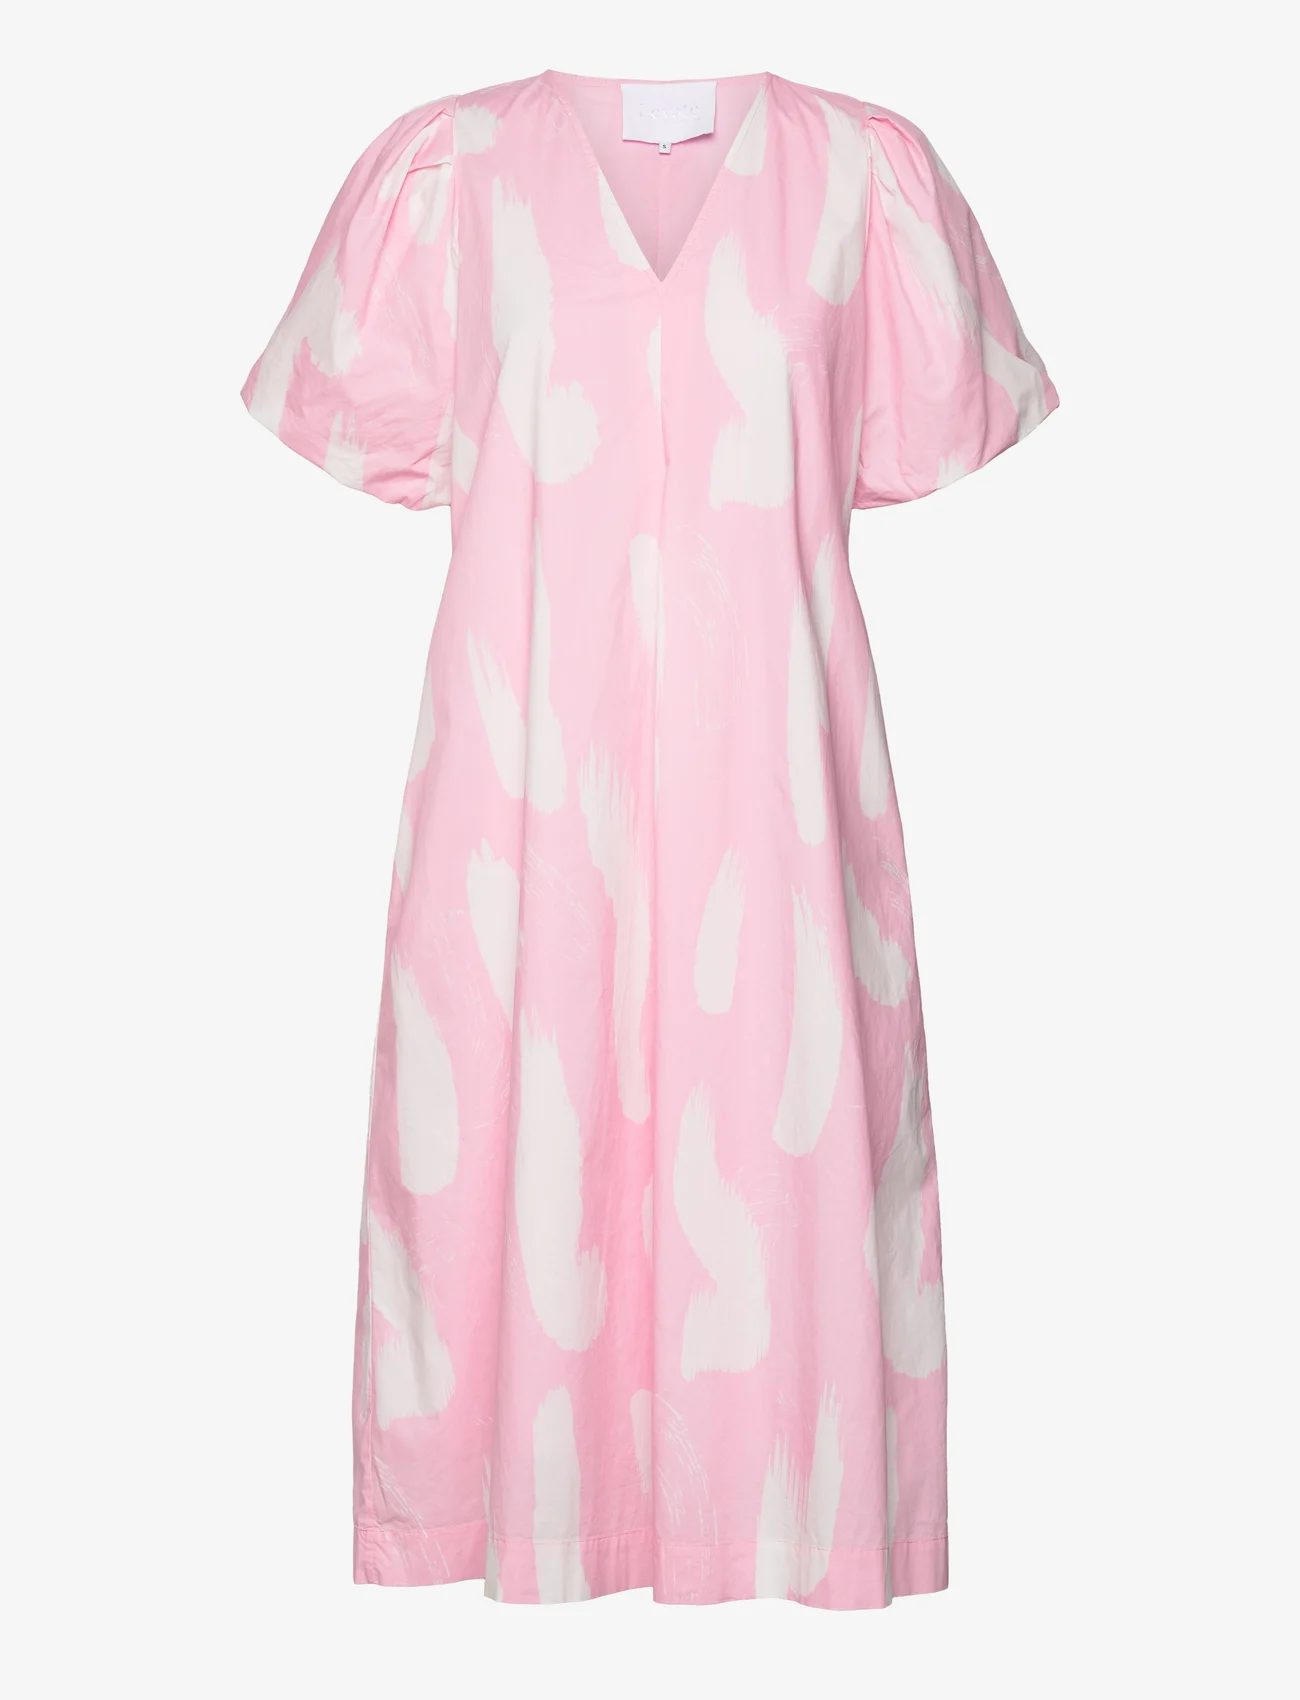 Levete Room - LR-ANNIKA - sukienki koszulowe - l430c - powder pink combi - 0